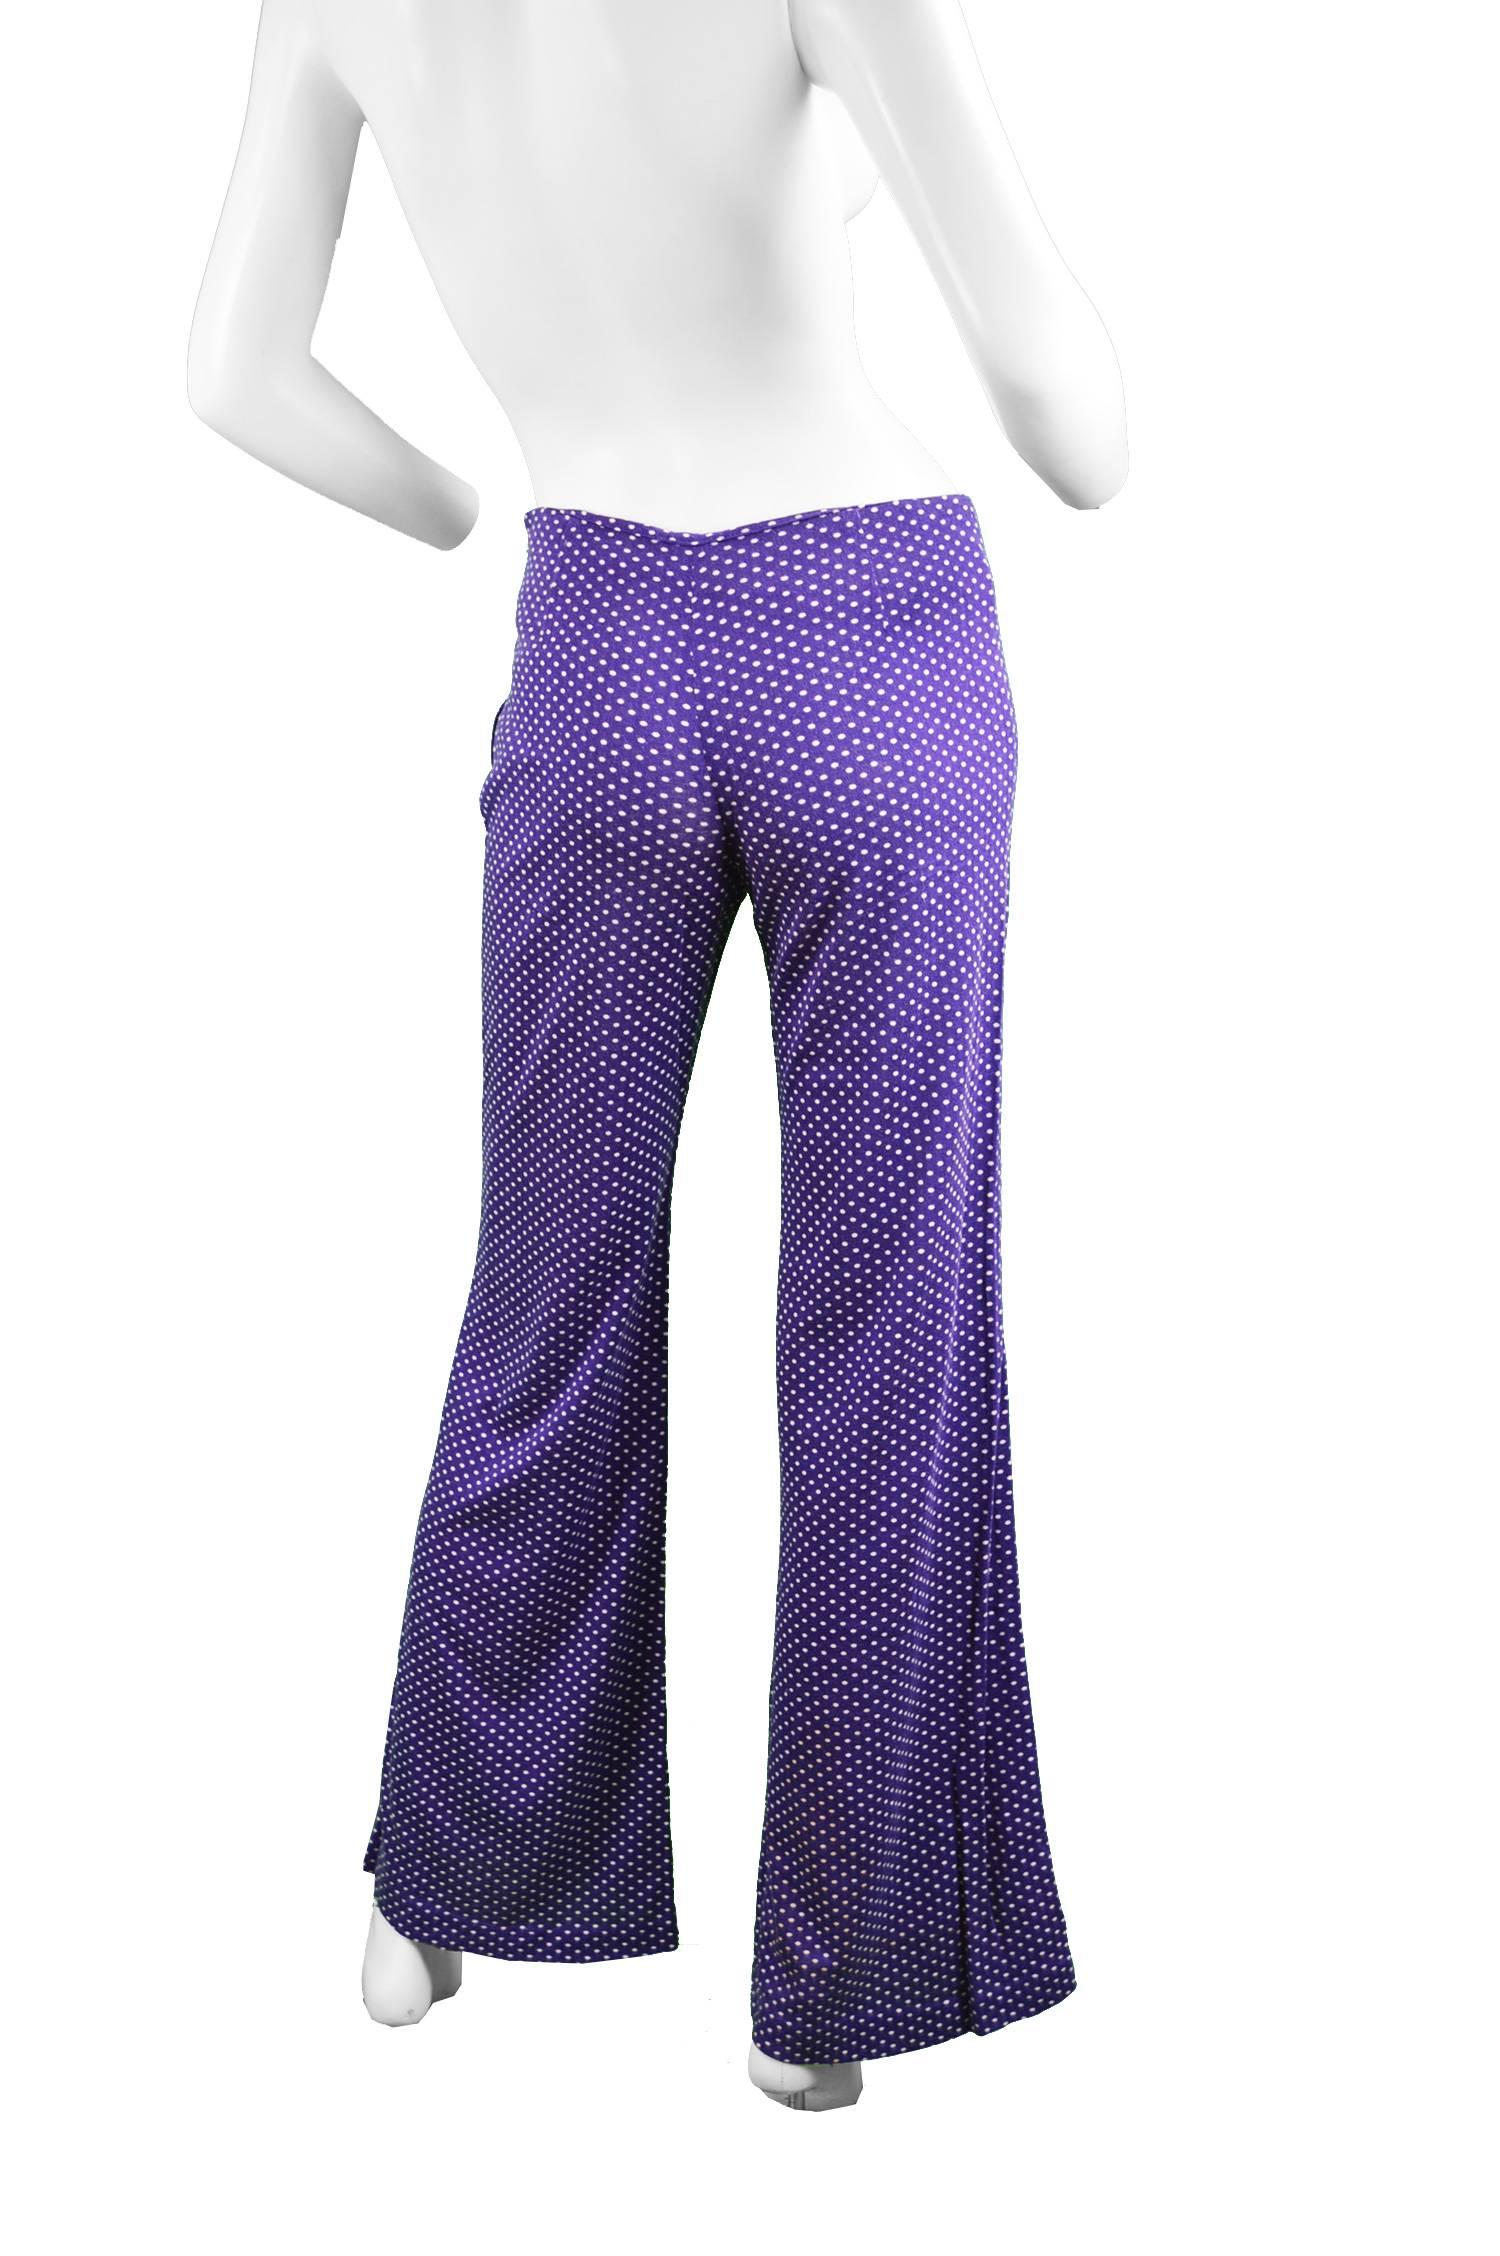 Biba Purple Polka Dot Two Piece Tunic Top and Palazzo Pant Suit, 1970s 2